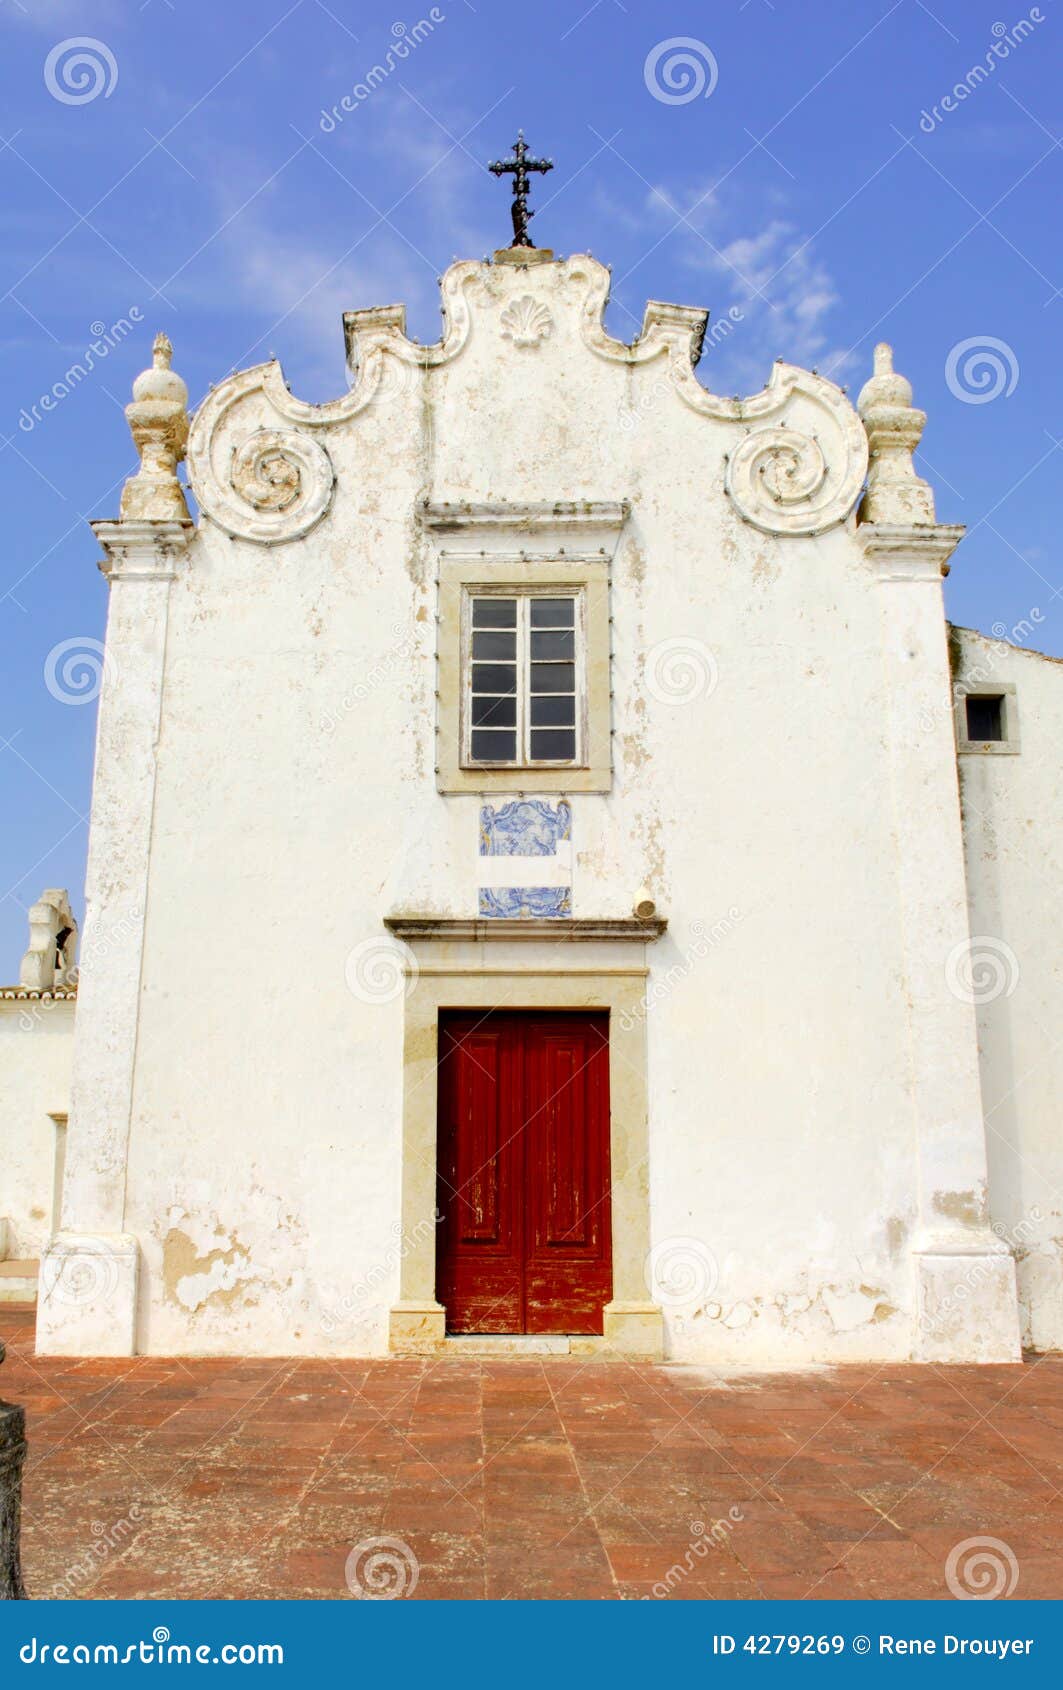 portugal, algarve, albufeira: church